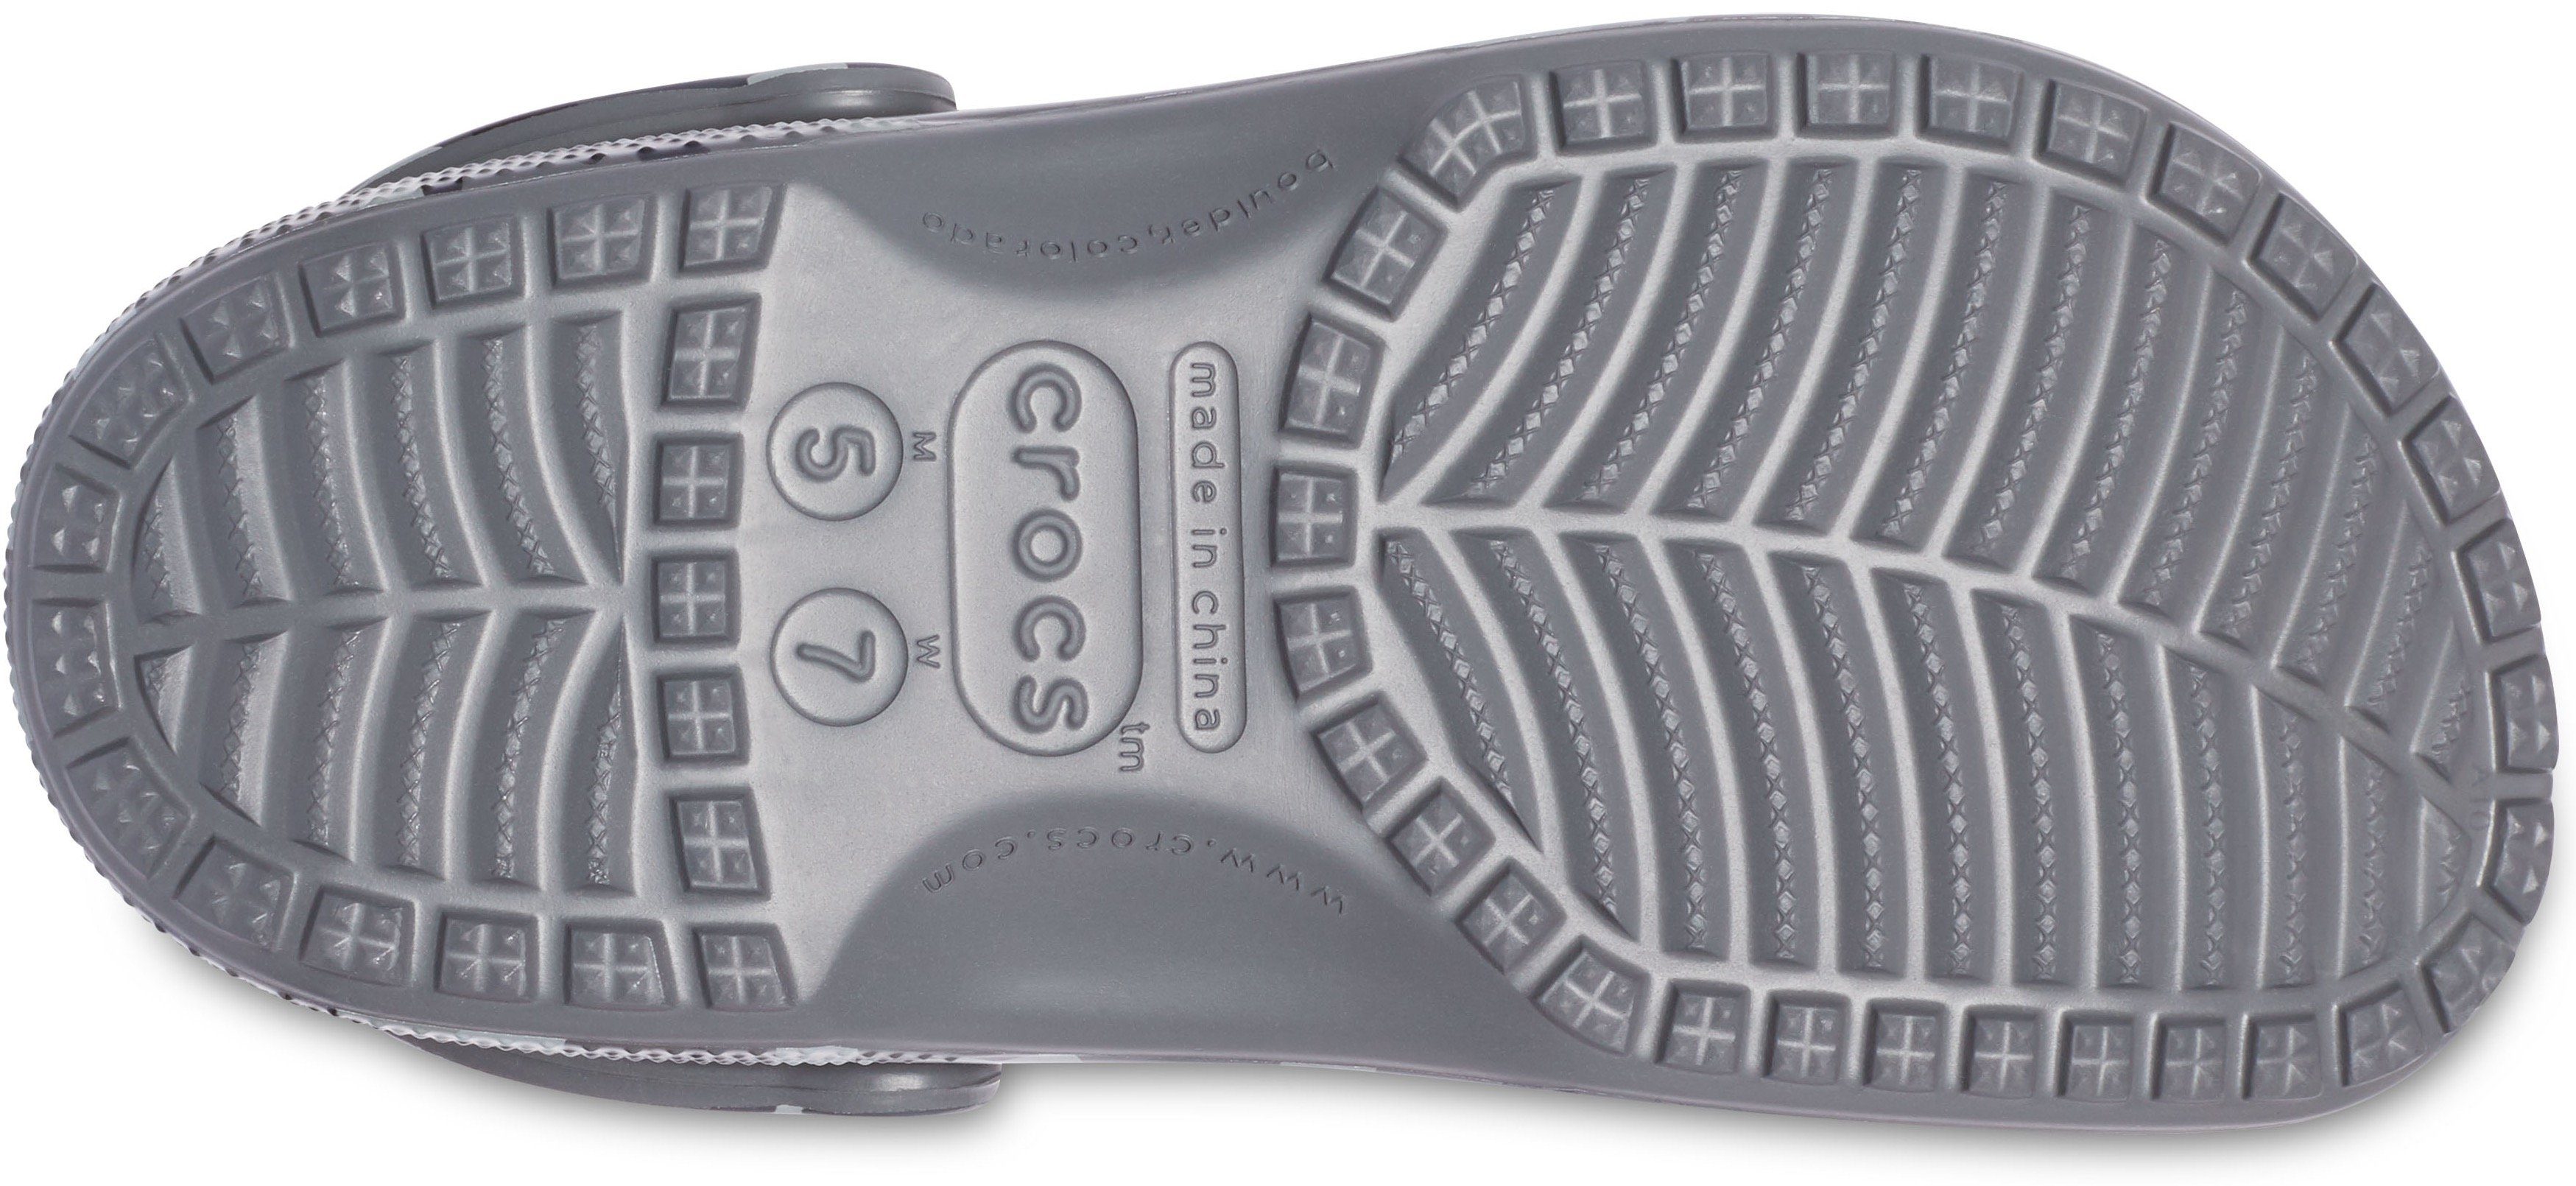 Camo grey/multi Muster Classic Clog slate Clog Crocs Printed mit allover